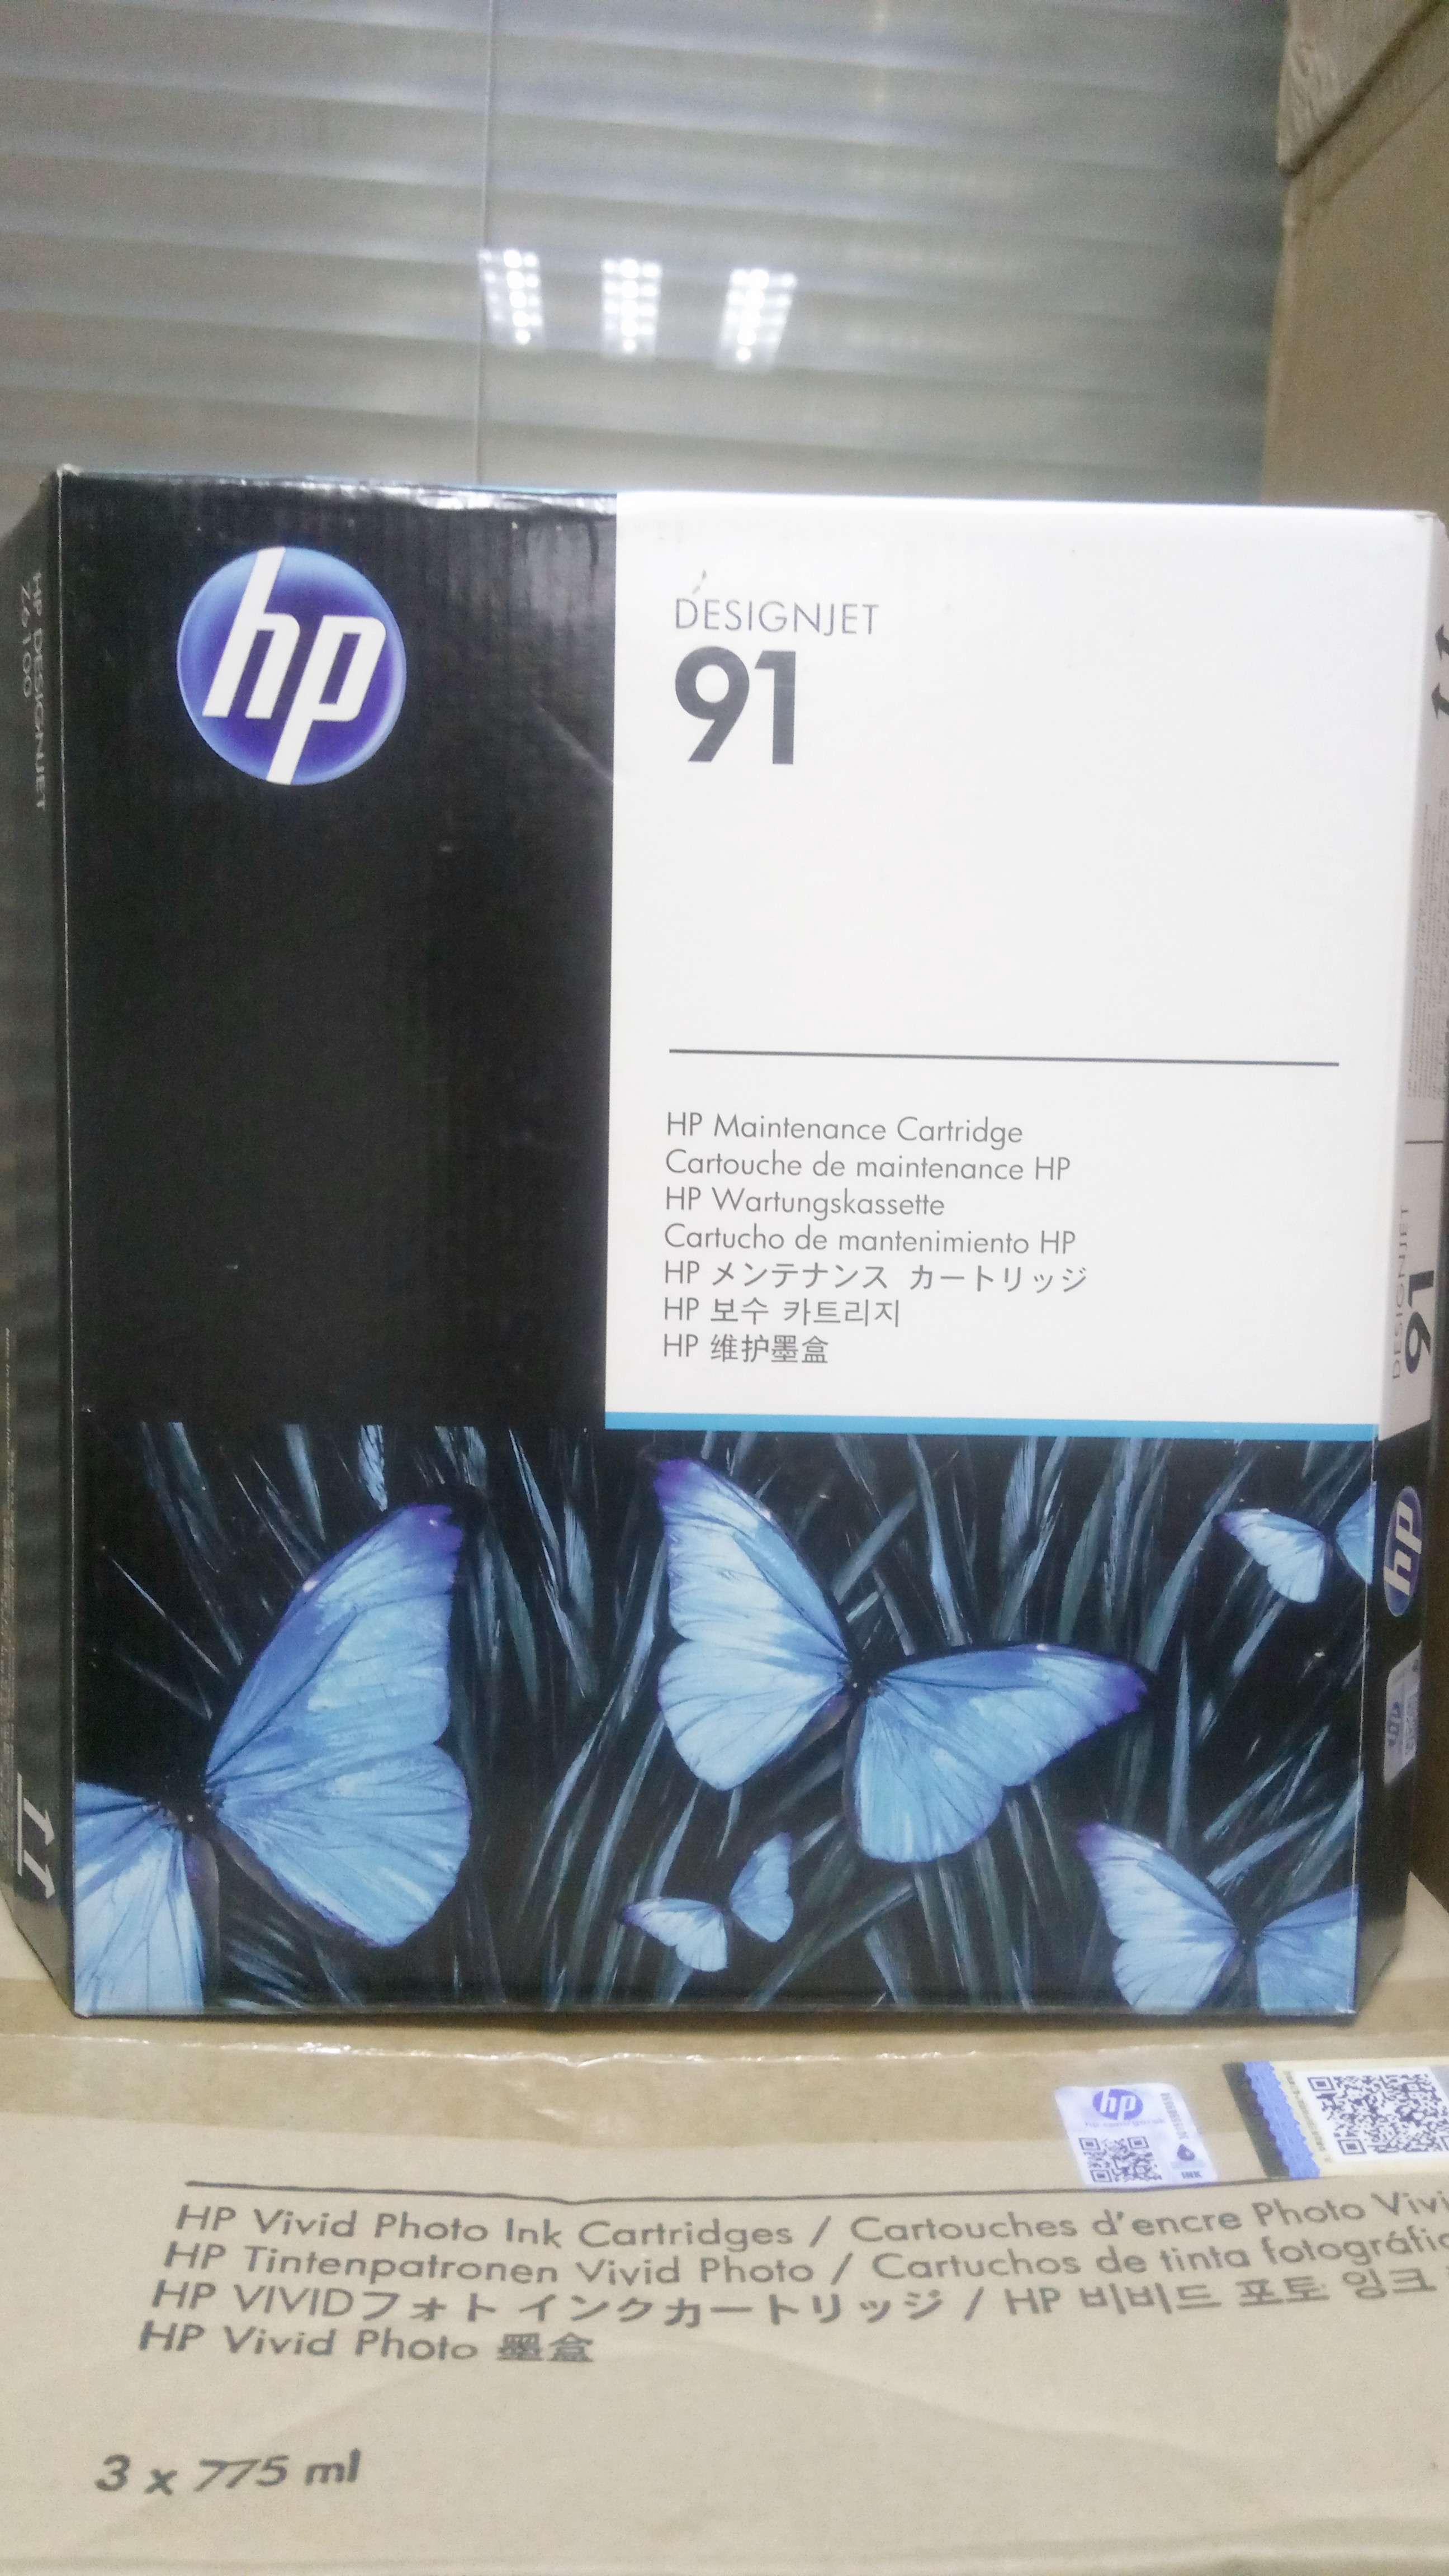 HPZ6100绘图仪大幅面打印机91号维护墨盒C9518A